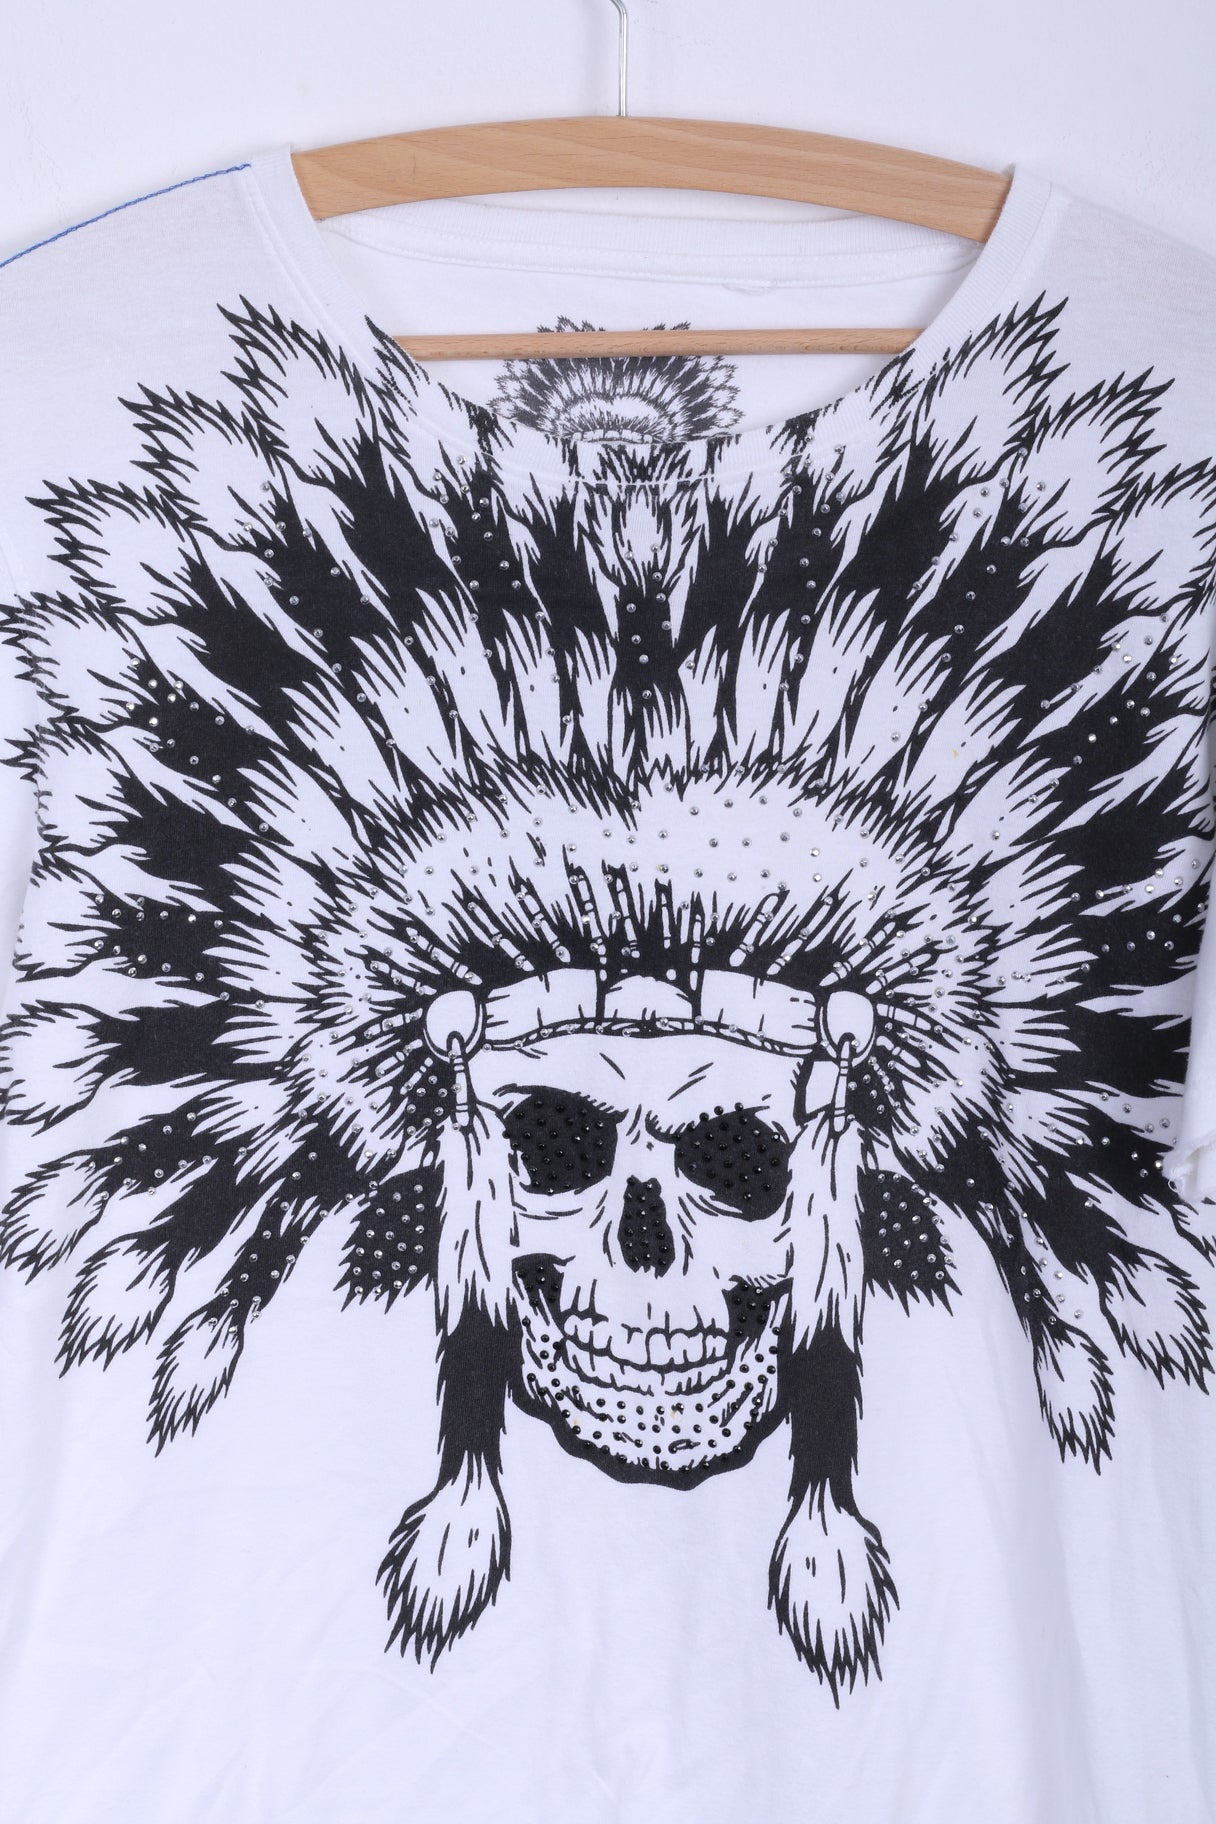 Cedar Wood State Mens S T-Shirt Cotton White Skull Apache Zircons